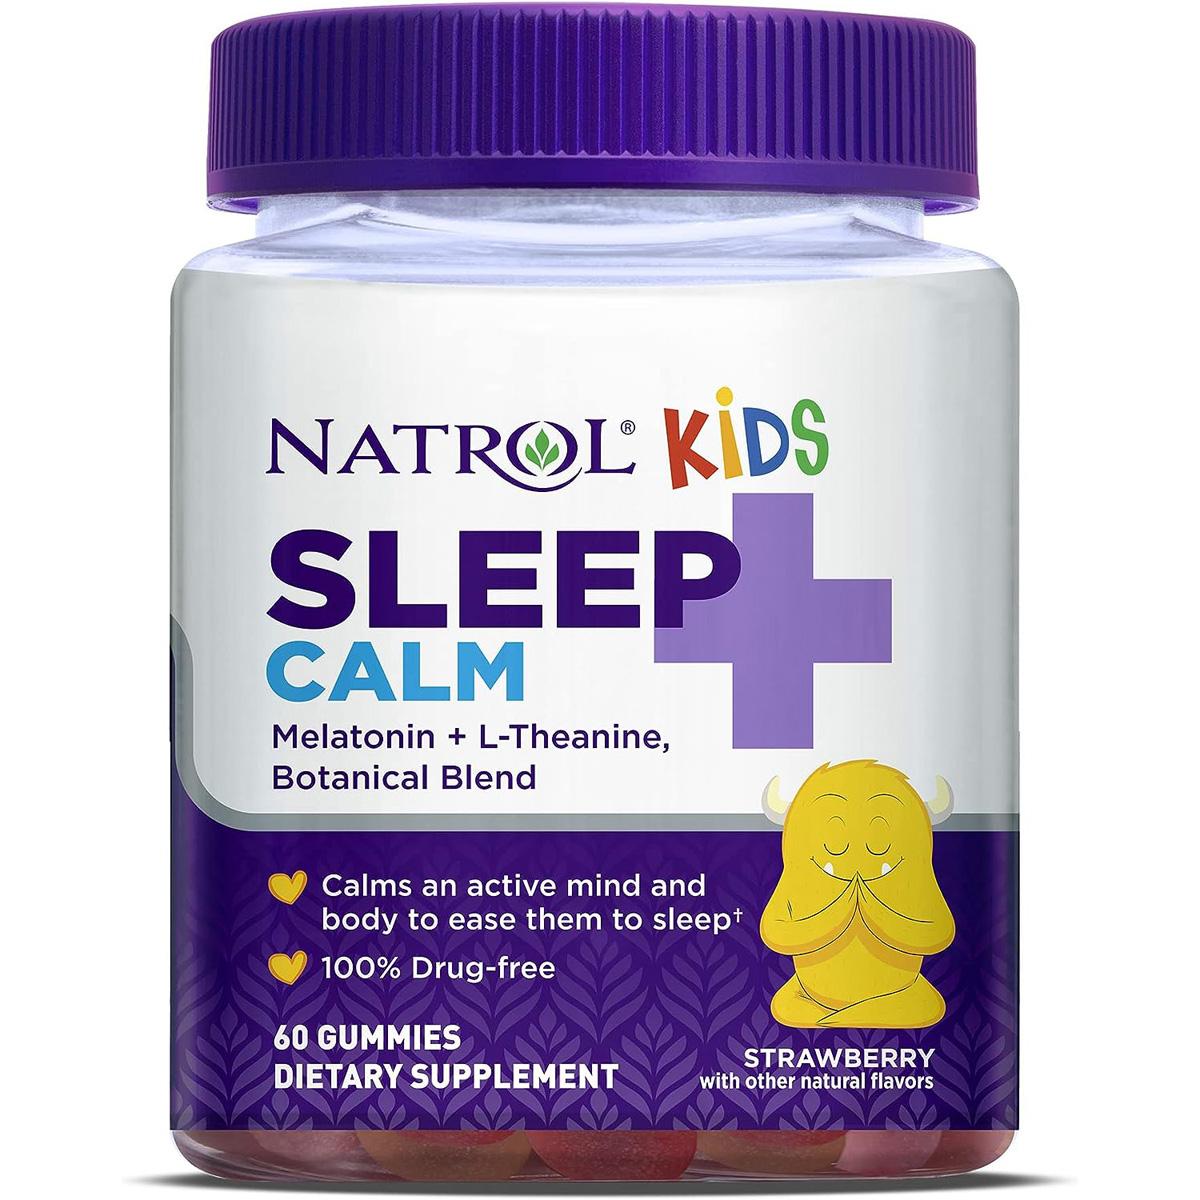 Natrol Kids Sleep+ Calm Melatonin and L-Theanine Sleep Aid Gummies for $4.74 Shipped